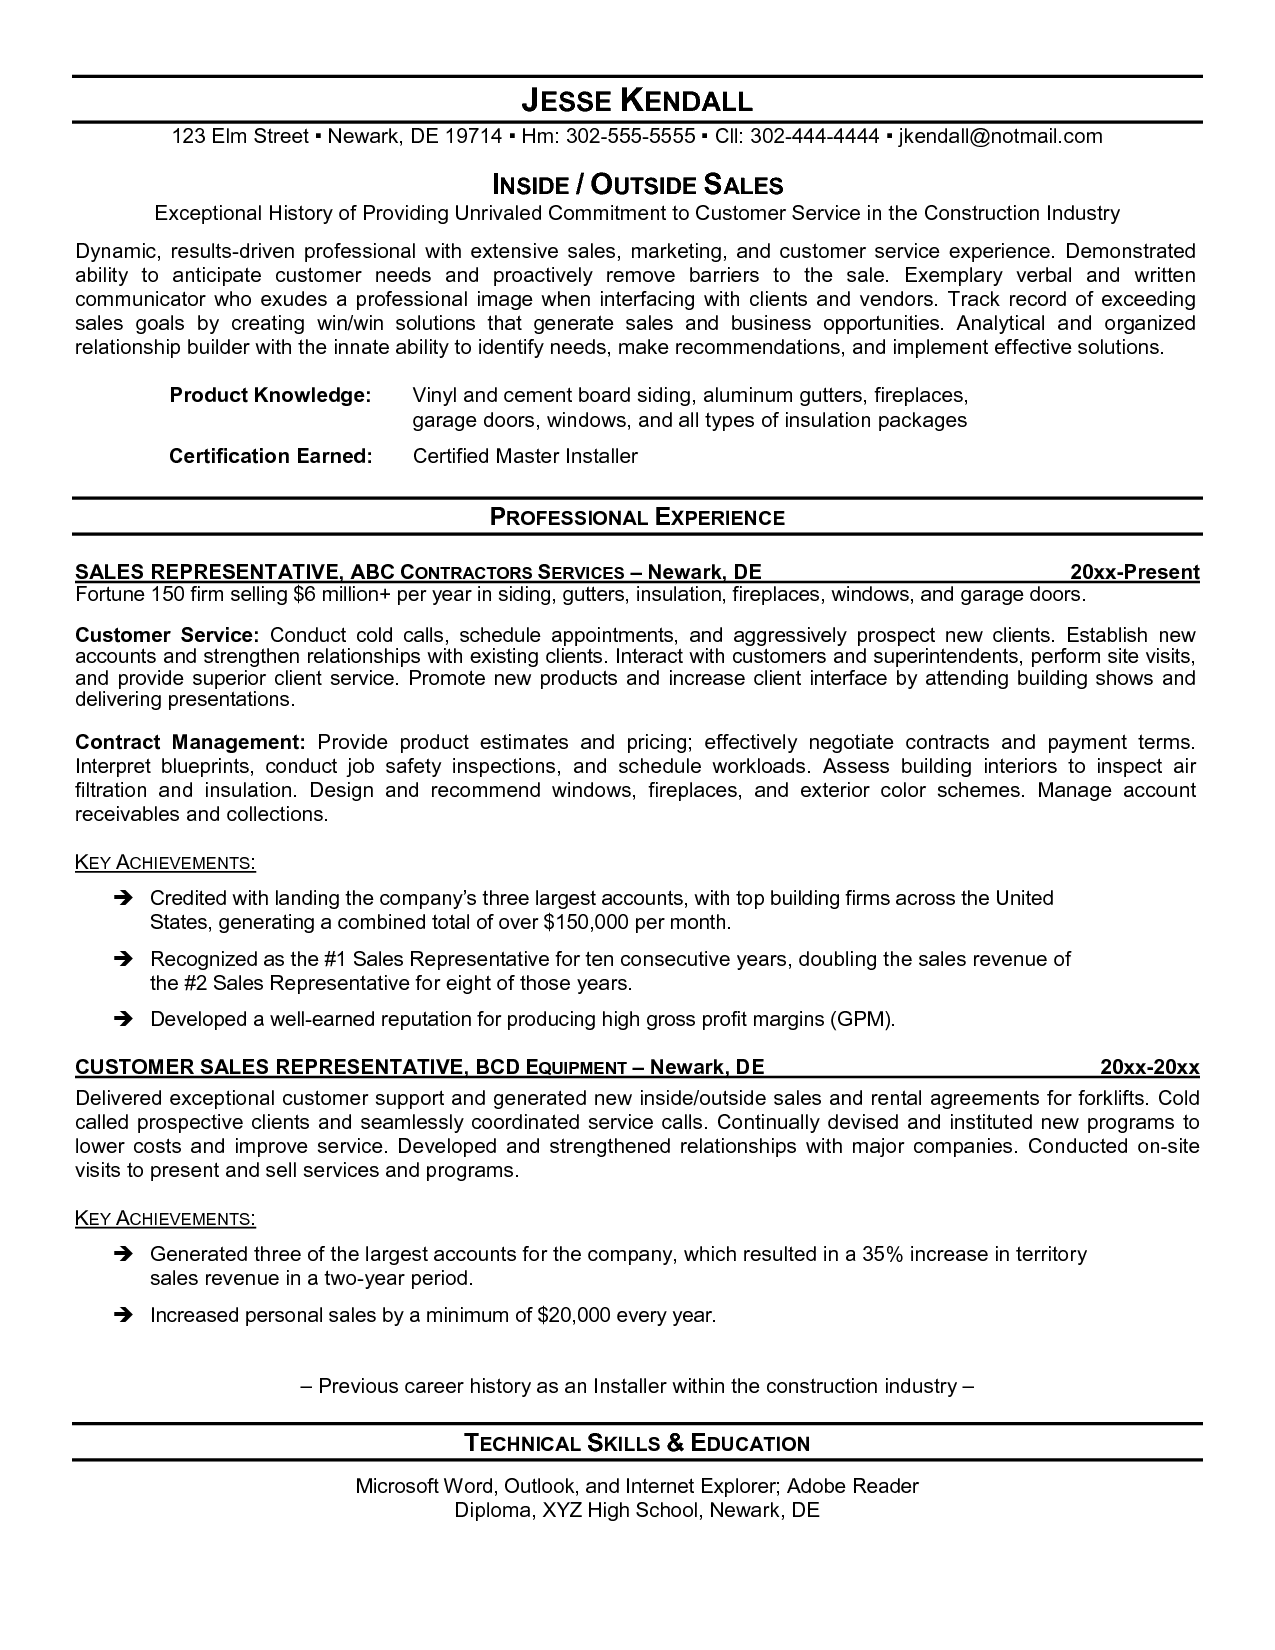 Industrial sales representative cover letter June 10 Pertaining To Outside Sales Job Description Template With Outside Sales Job Description Template